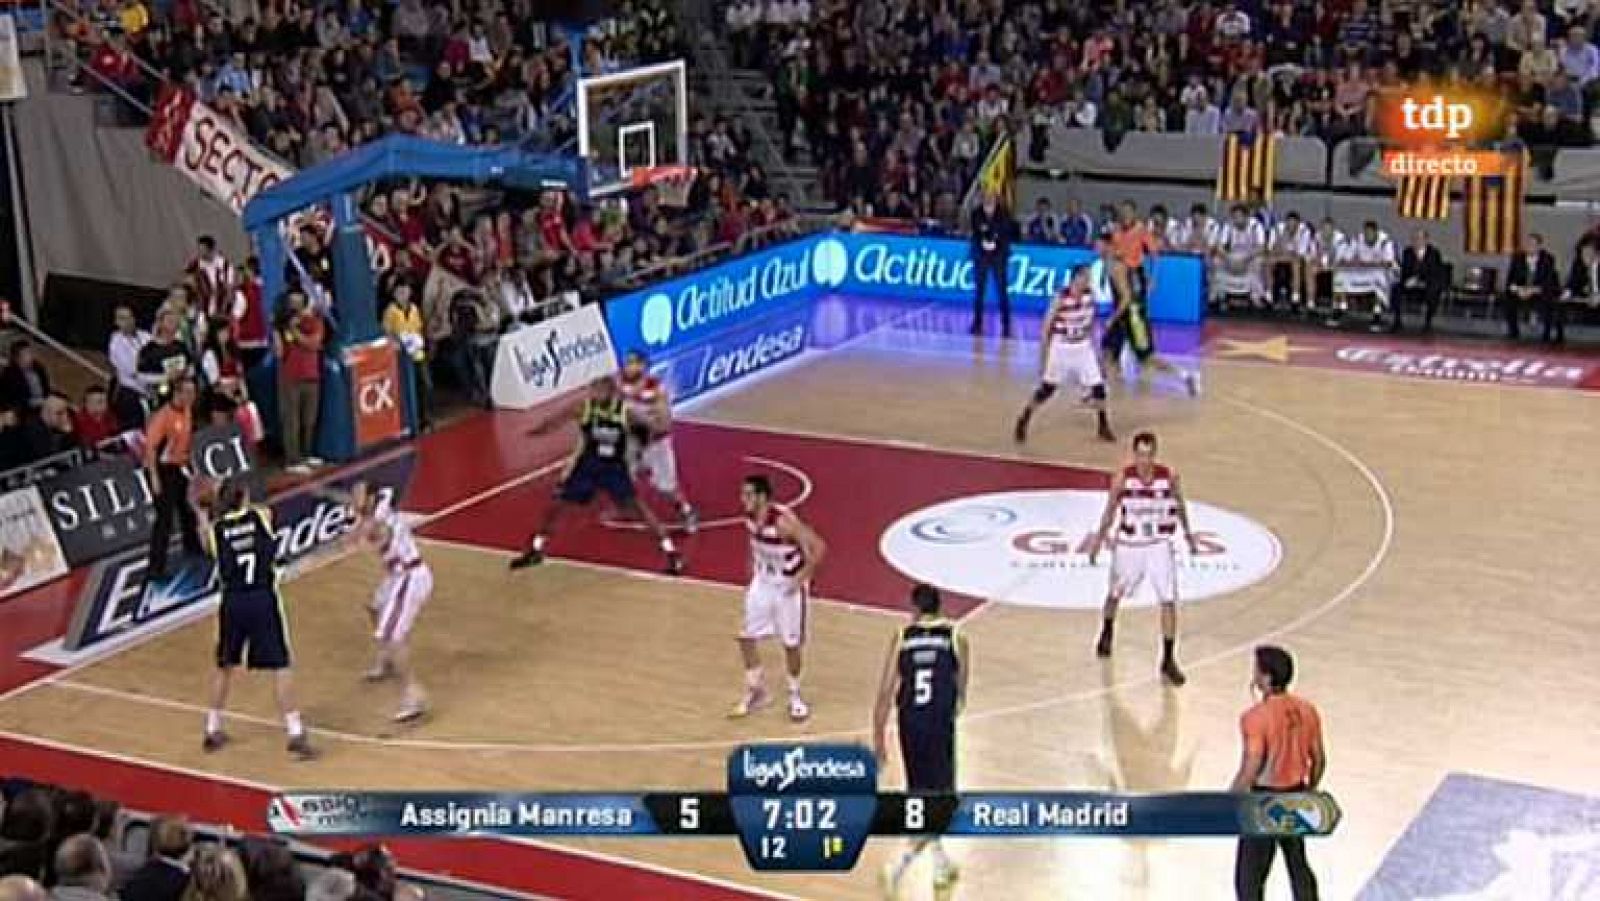 Baloncesto en RTVE: Assignia Manresa-Real Madrid  | RTVE Play